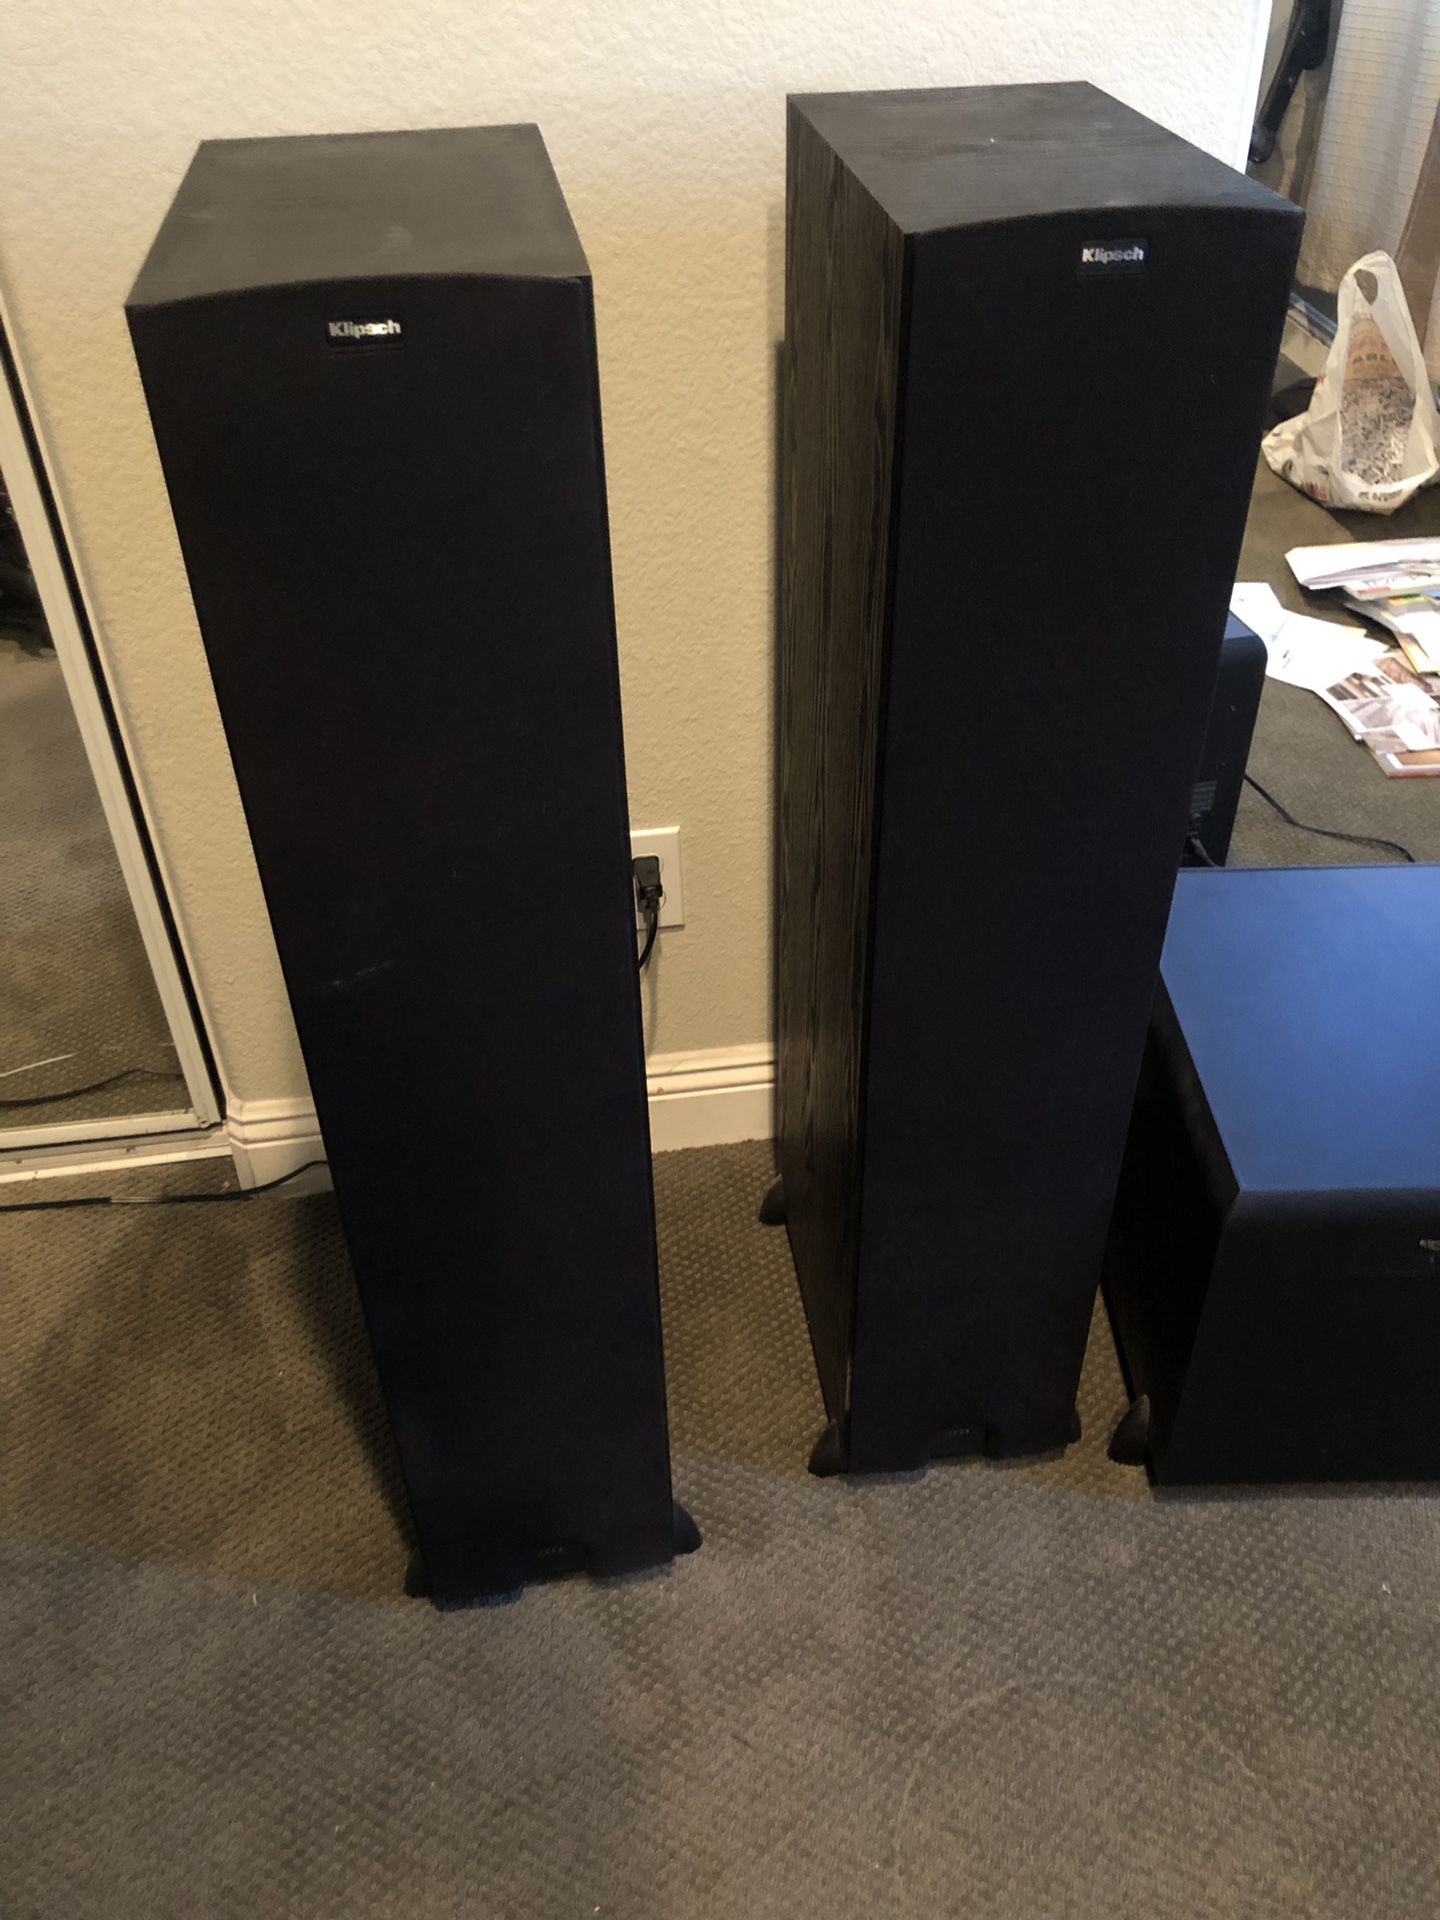 Klipsch Speakers KF28 and subwoofer SW350